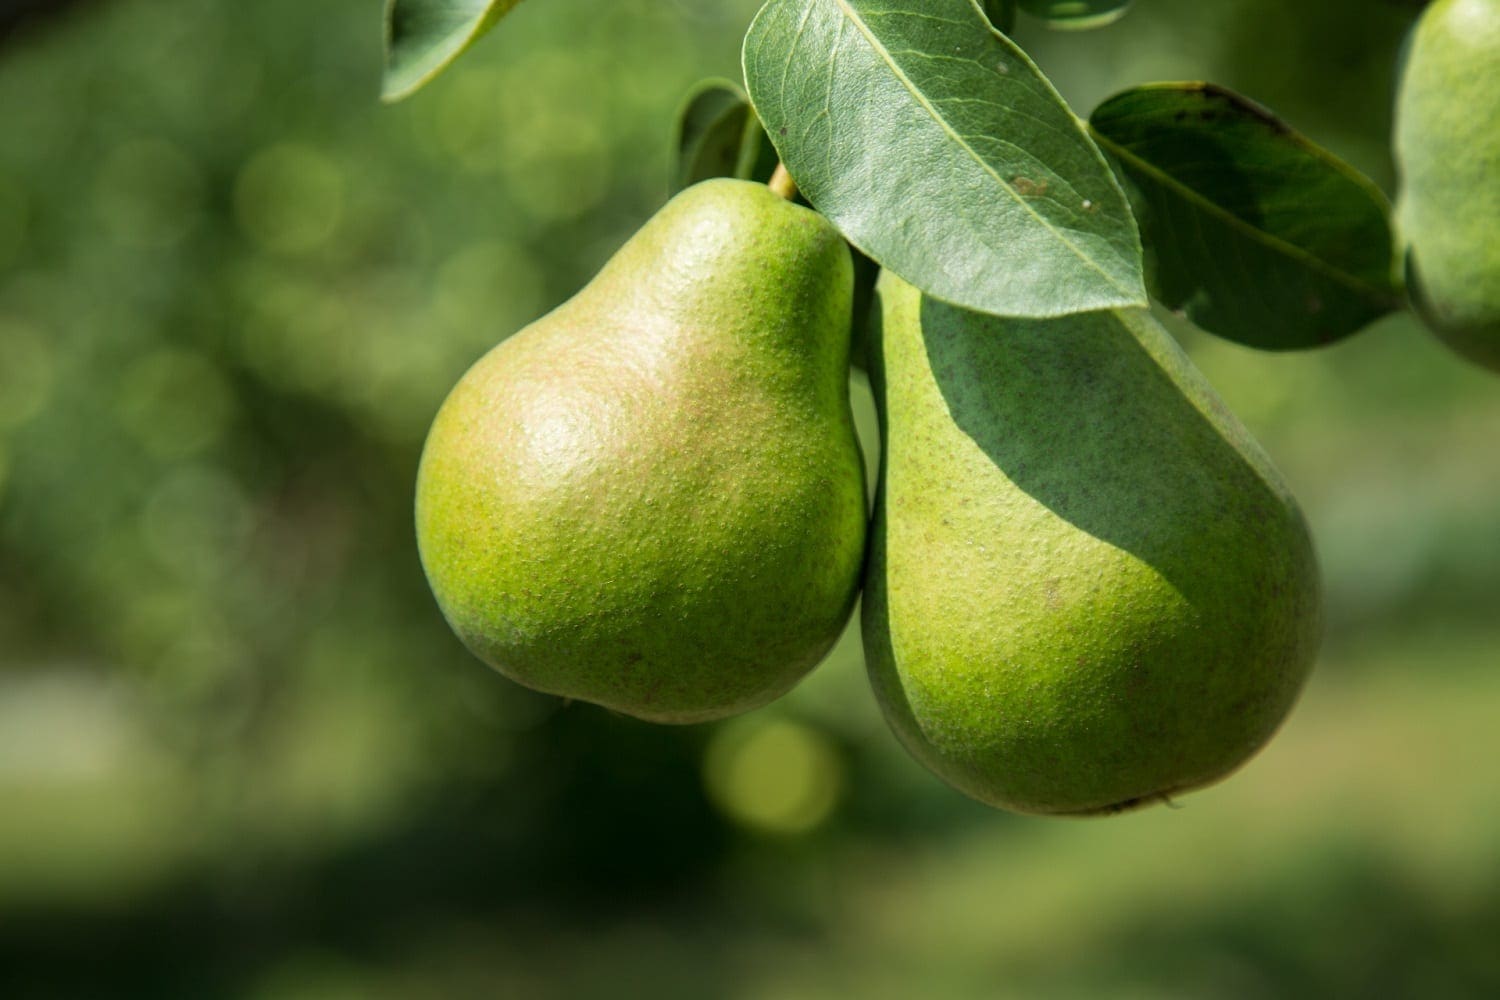 Green pears on the tree, photo credit: George Hodan